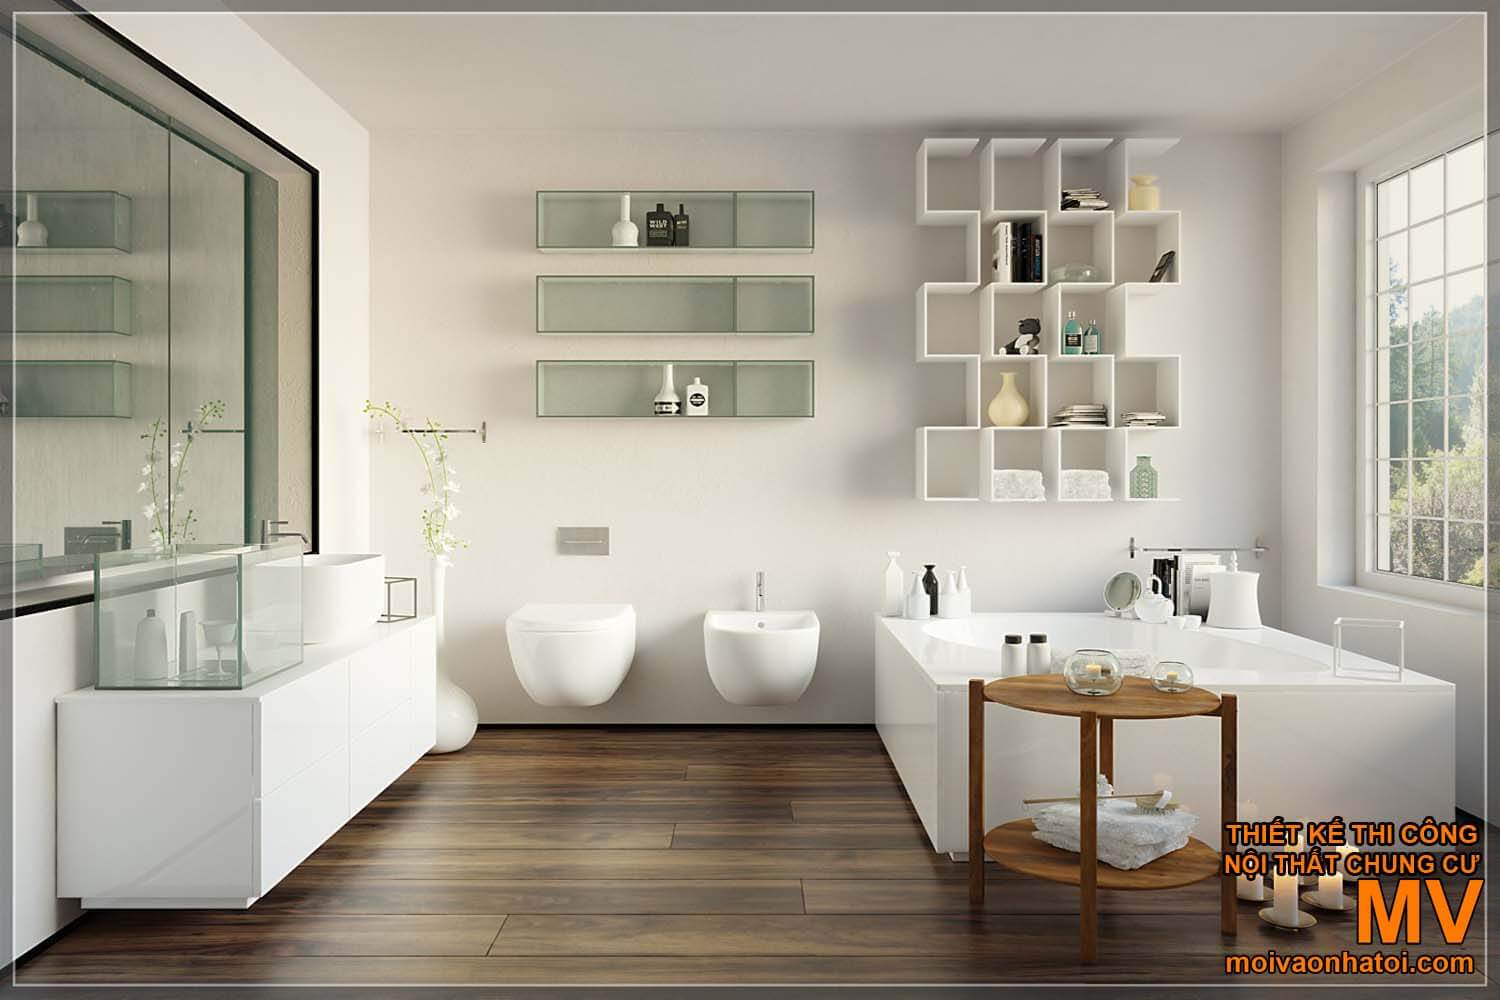 lavabo 세척 얼굴, 아름다운 현대적인 욕실 디자인